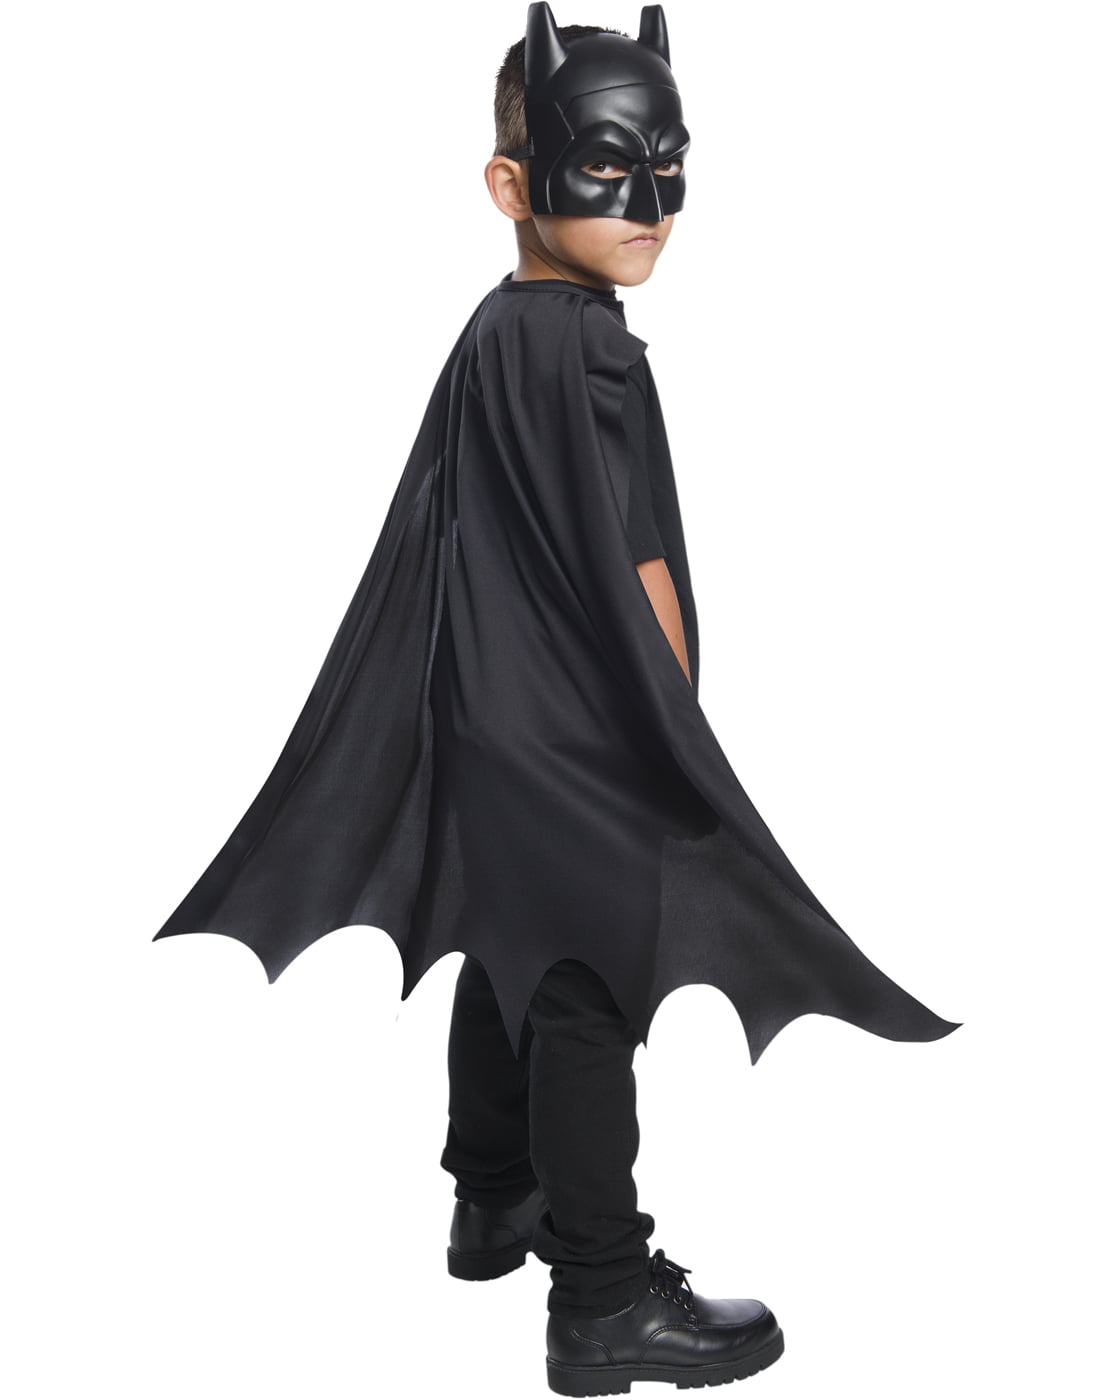 Batman cape. Плащ Бэтмена. Детский костюм Бэтмена. Костюм Бэтмена на утренник. Костюм Бэтмена черный.